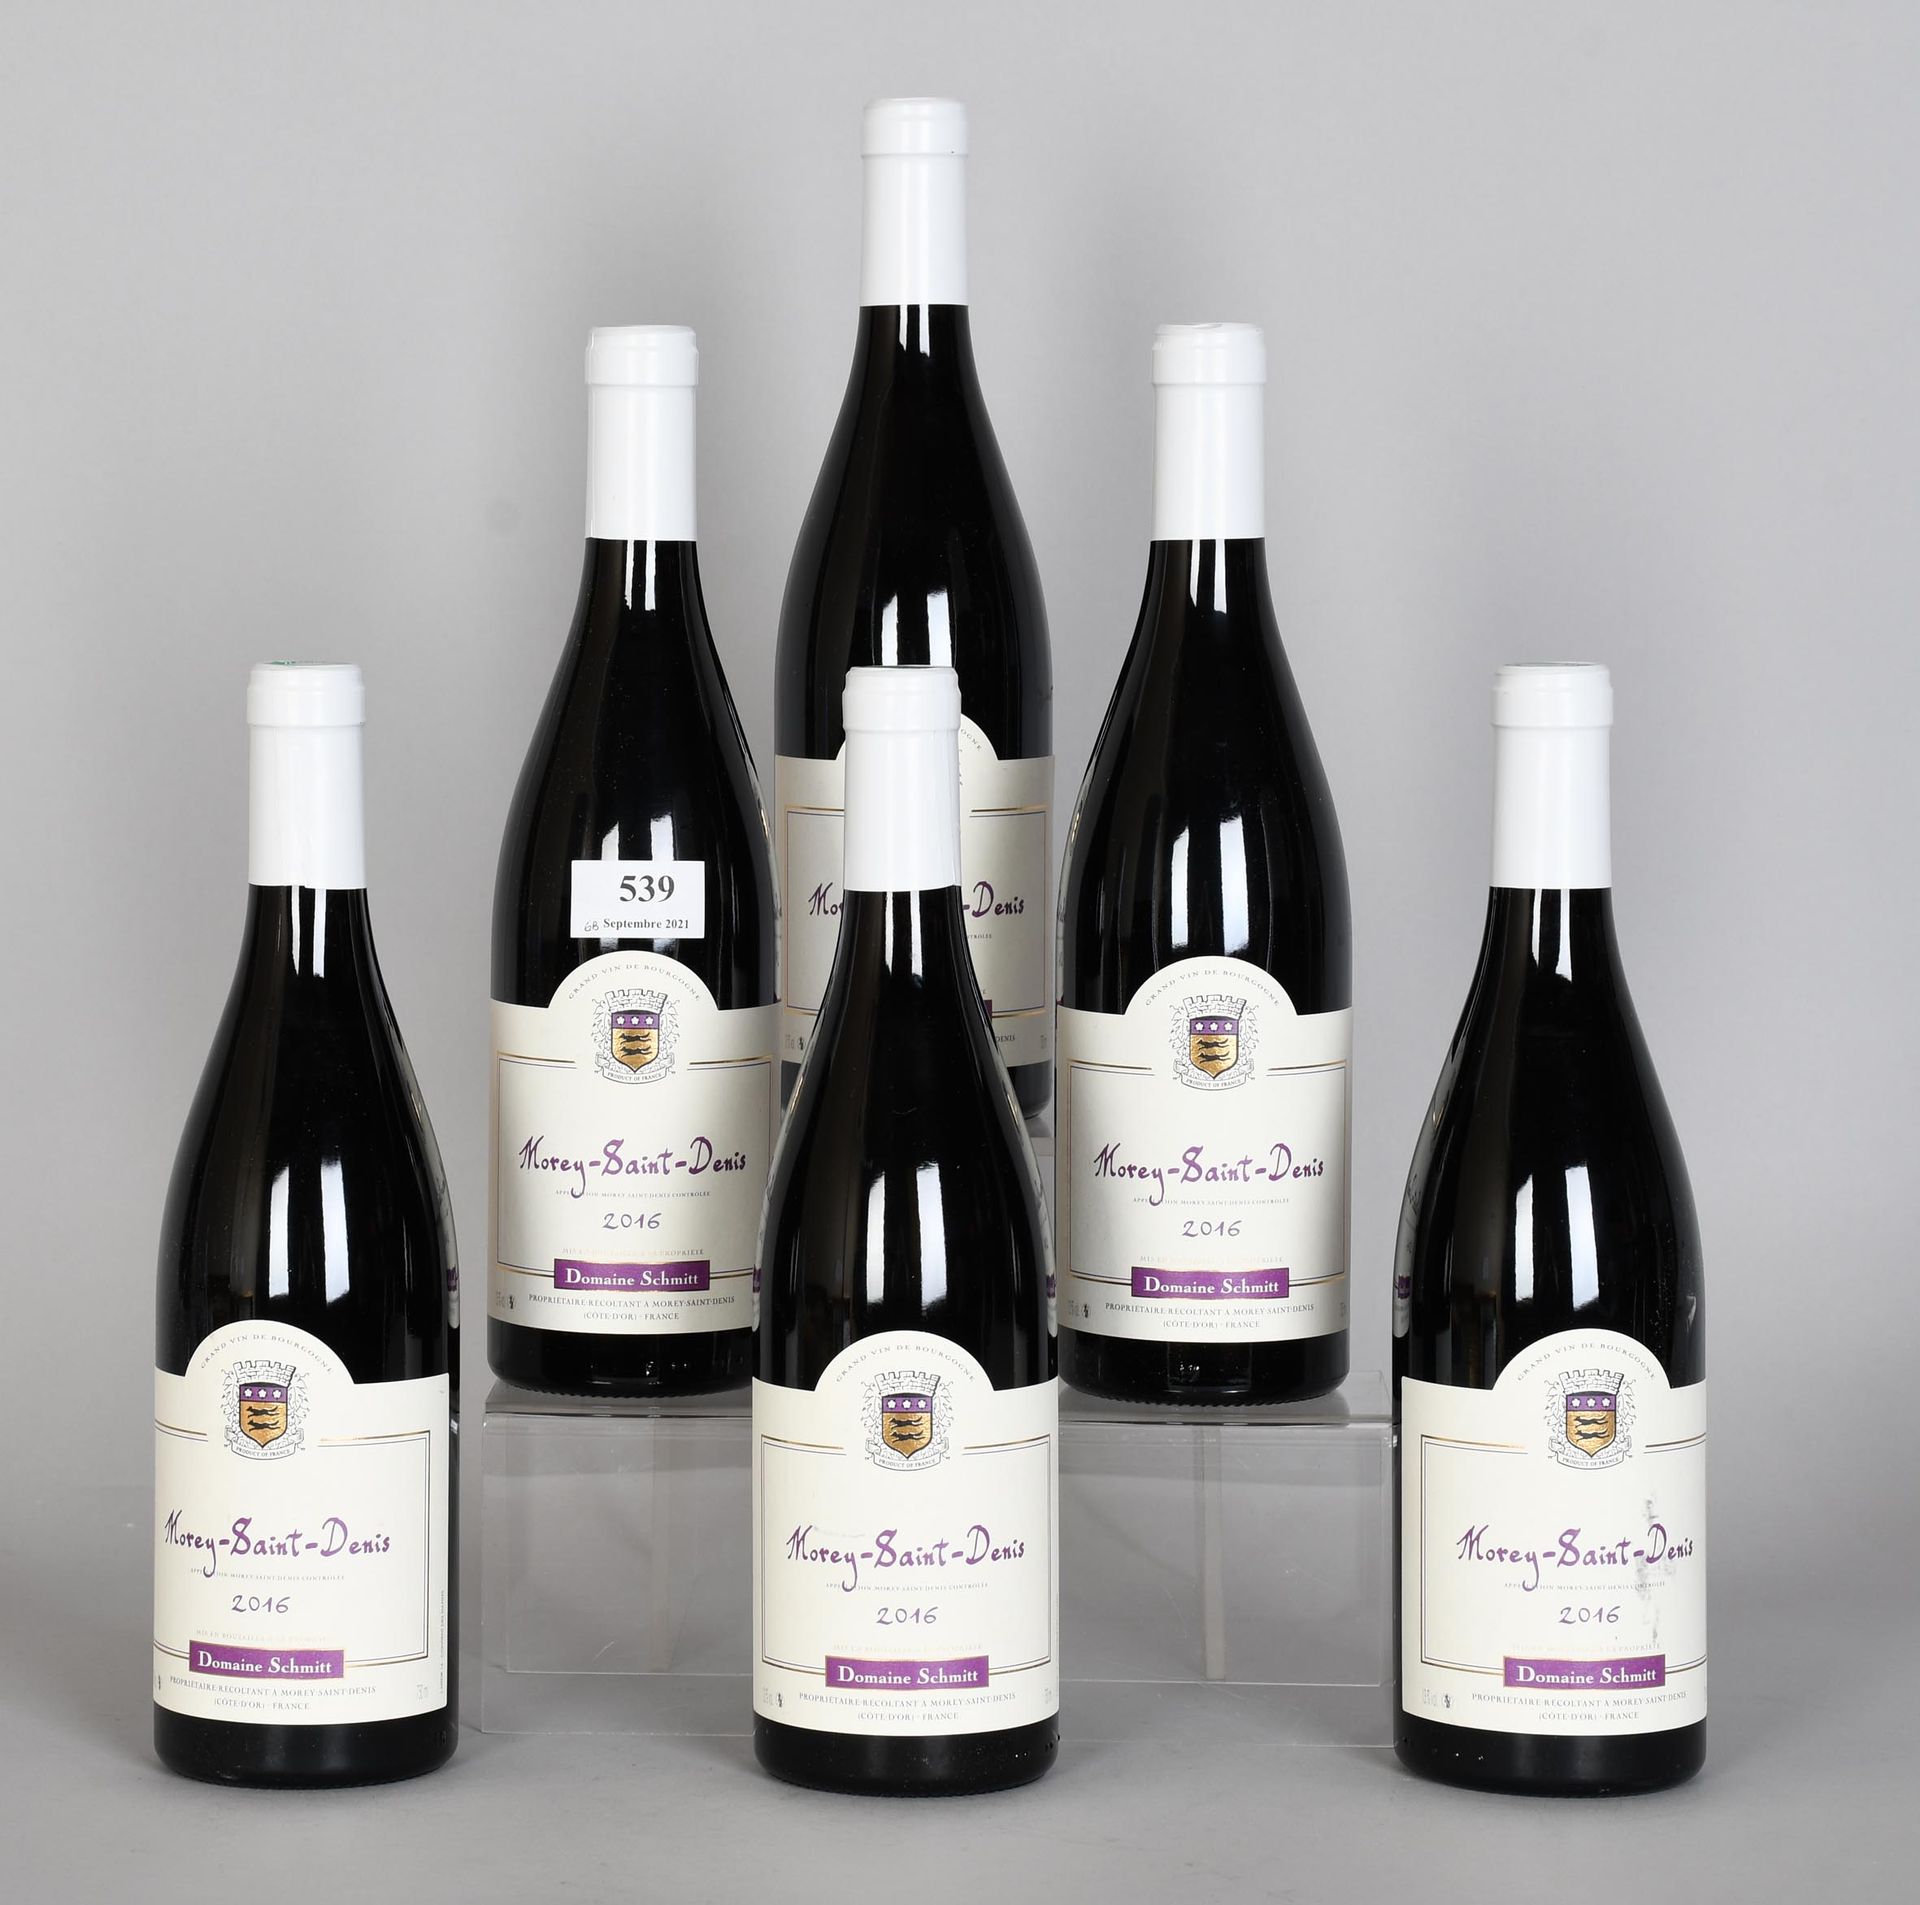 Null Morey-Saint-Denis 2016 - Mise propriété - Sei bottiglie di vino

Grande vin&hellip;